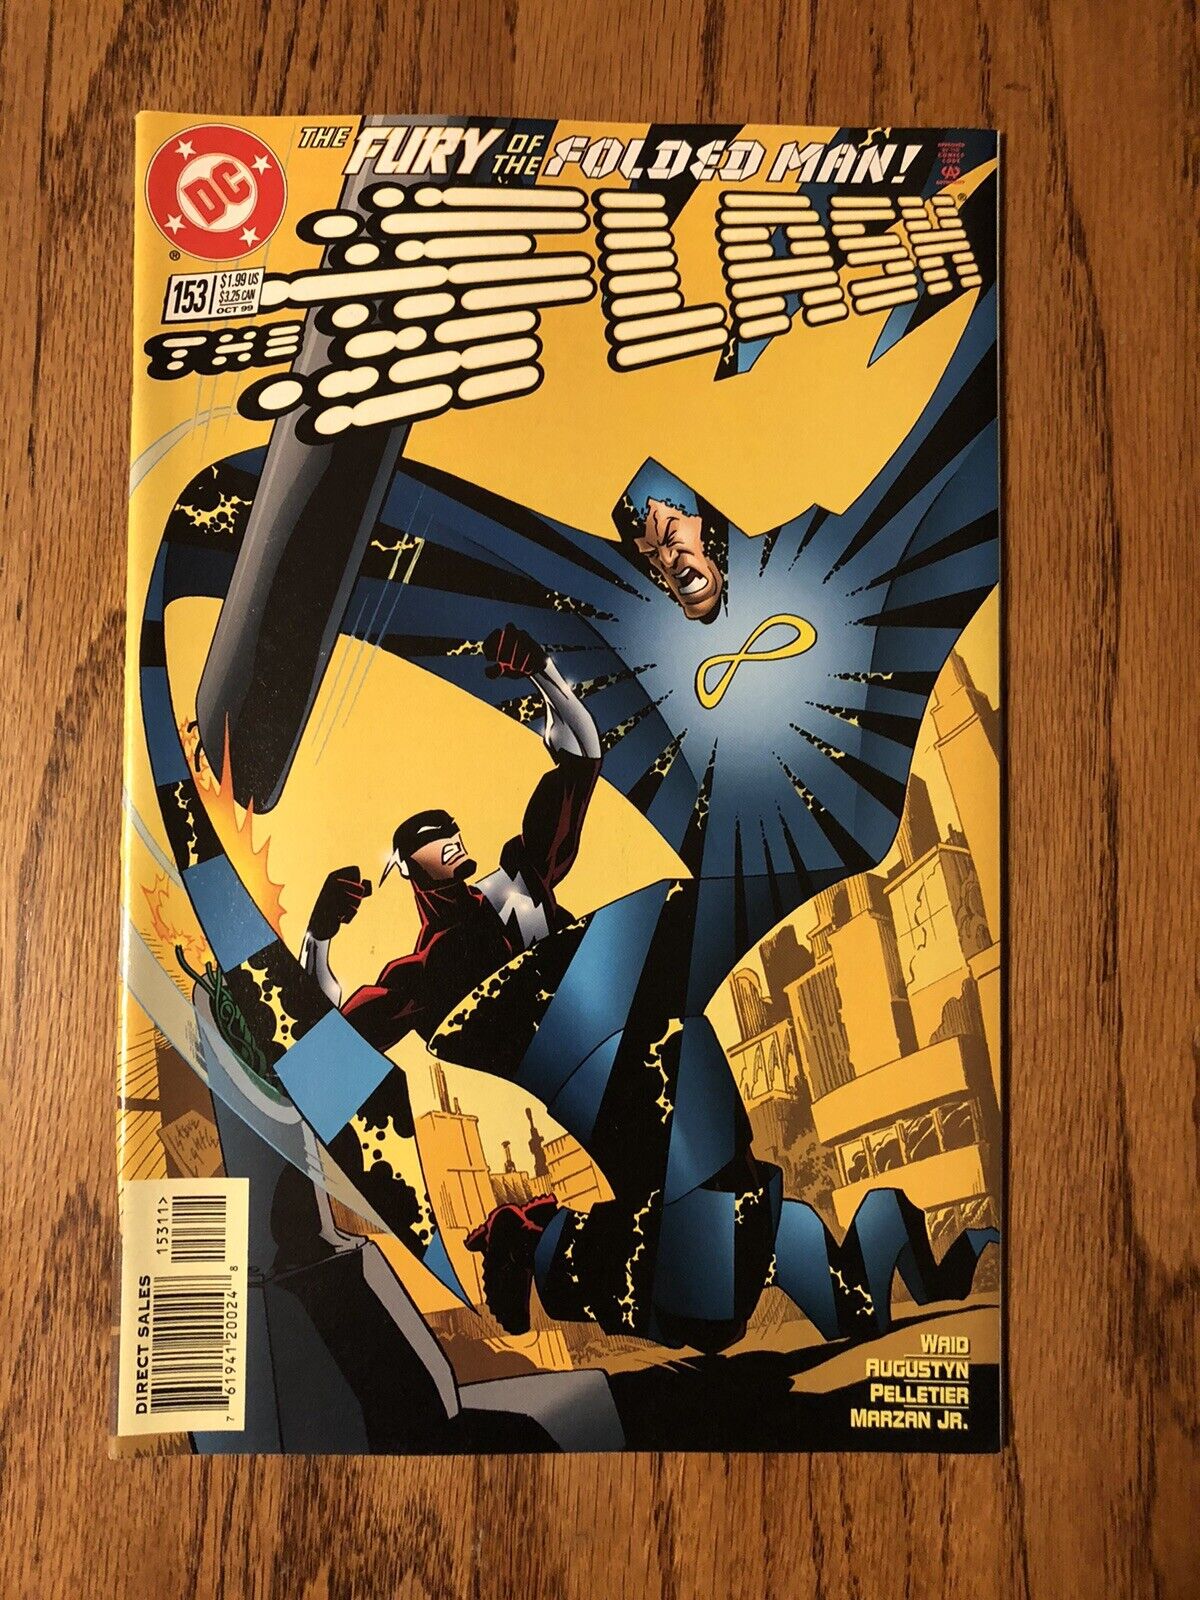 FLASH #153 (DC Comics Vol. 2,1987) Mark Waid/Brian Augustyn